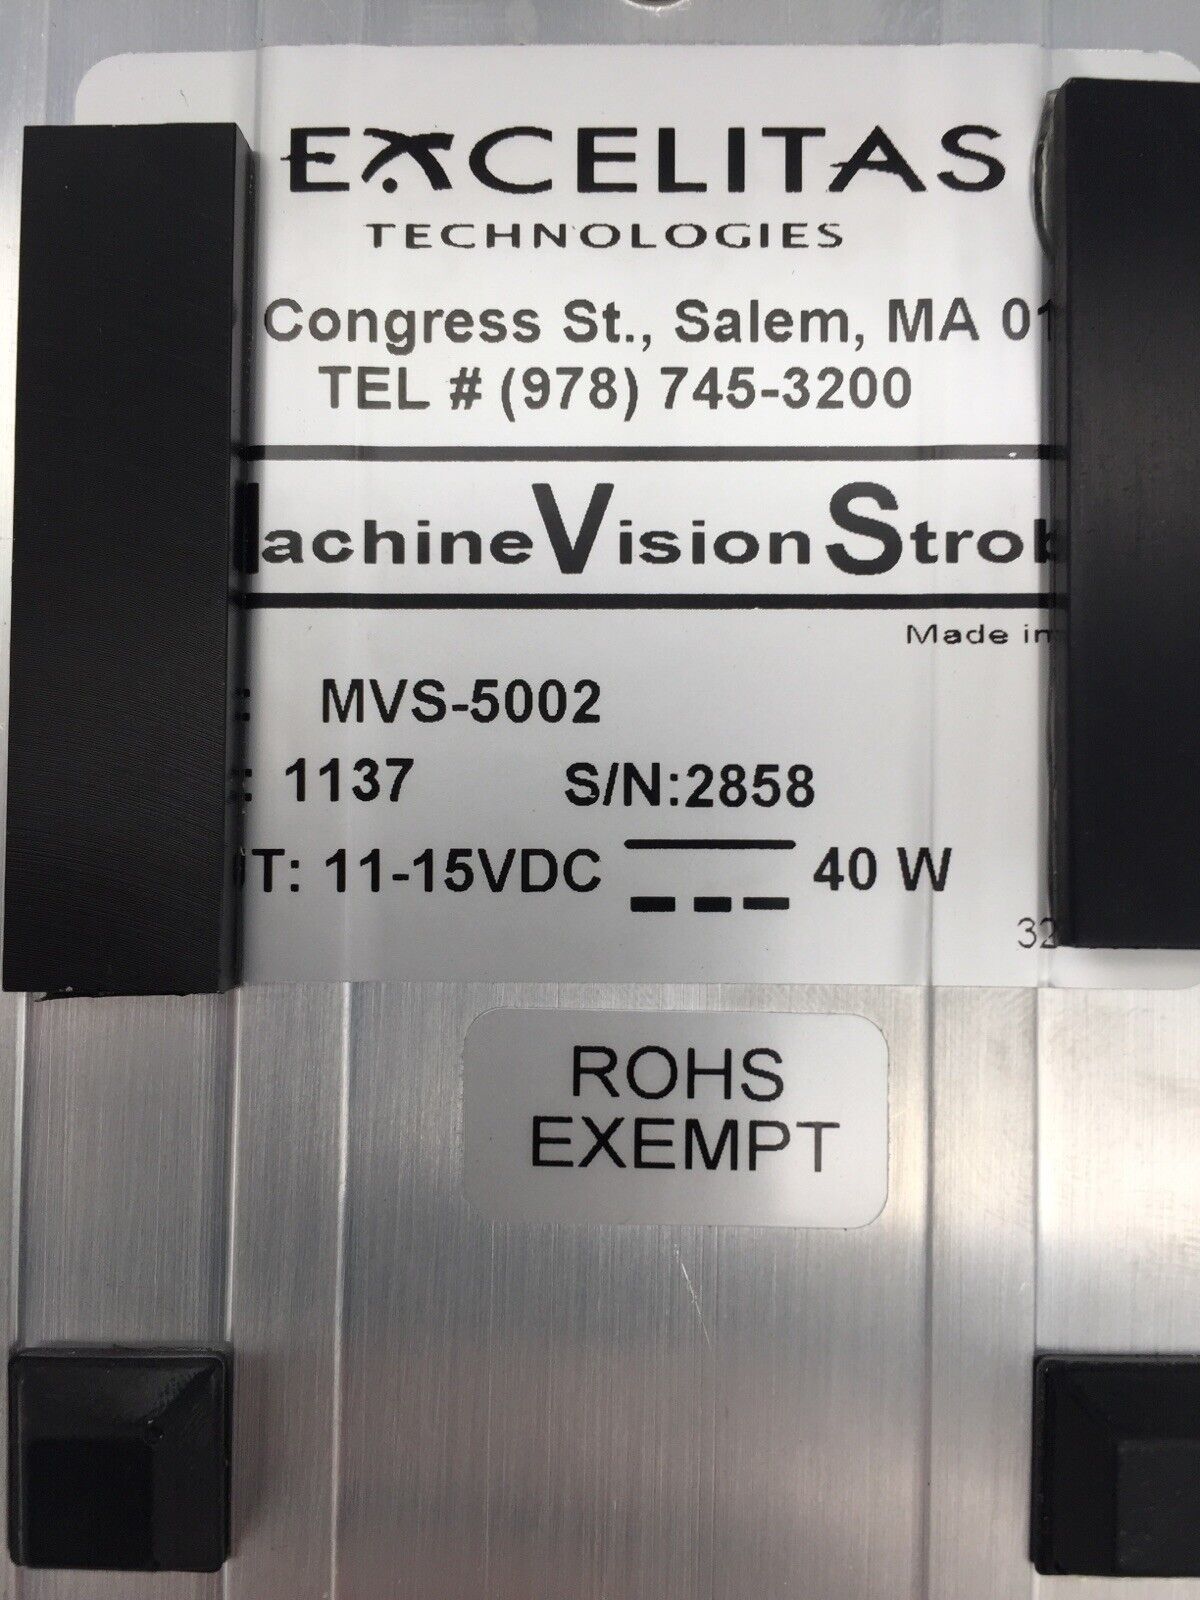 Perkin Elmer MVS-5002 Machine Vision Strobe